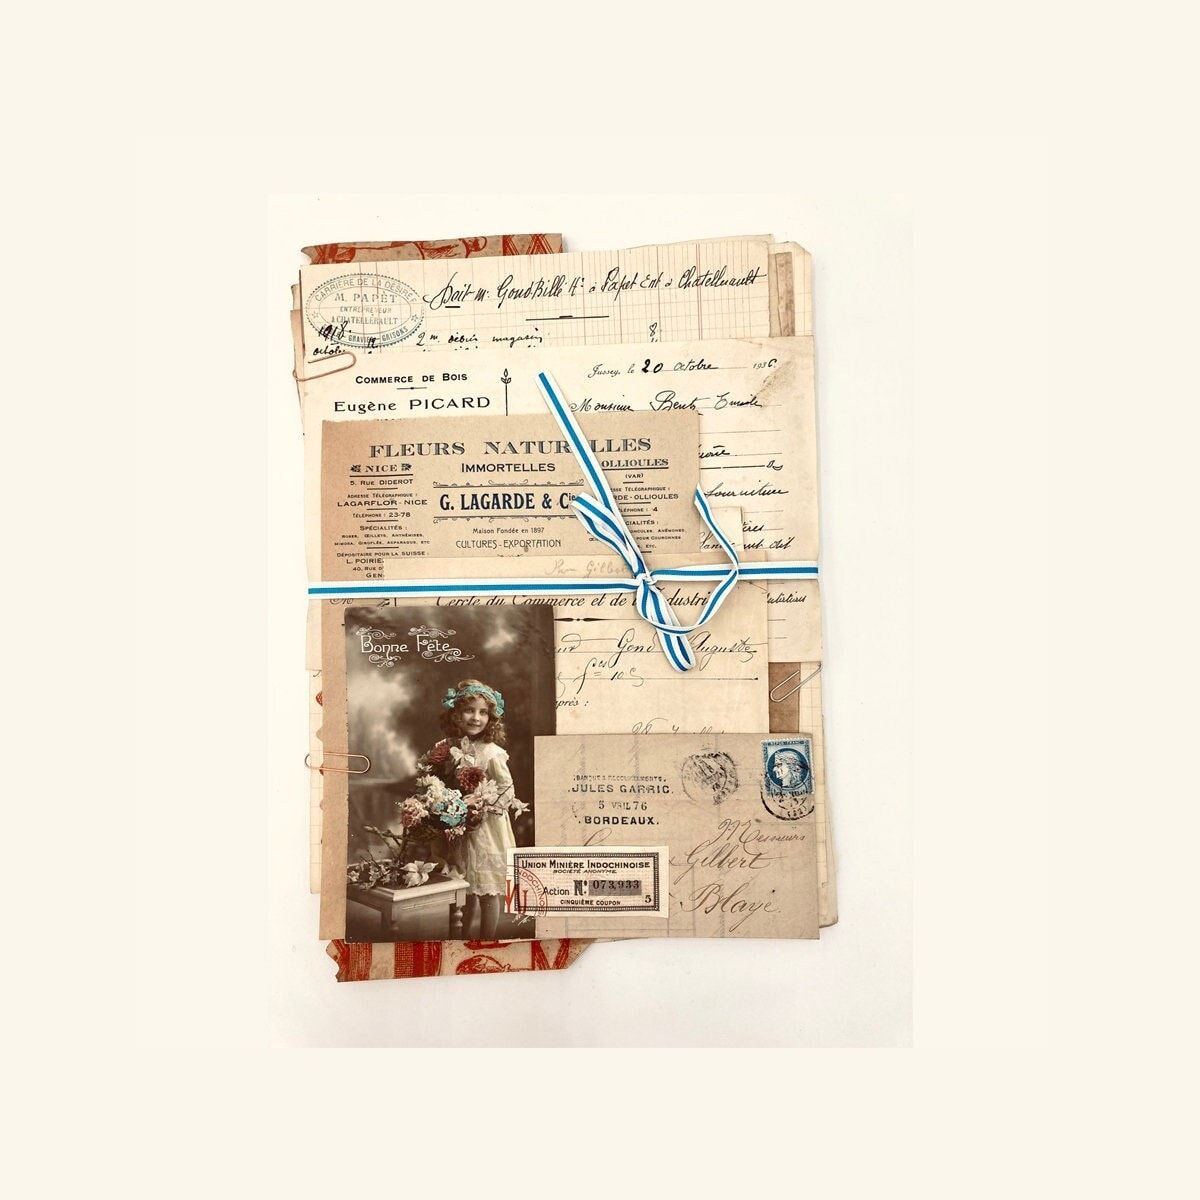 Distressed Ephemera Digital Paper, Instant Download Vintage Scrapbook Paper,  Old Paper Textures, Decoupage Printable Digital Backgrounds 